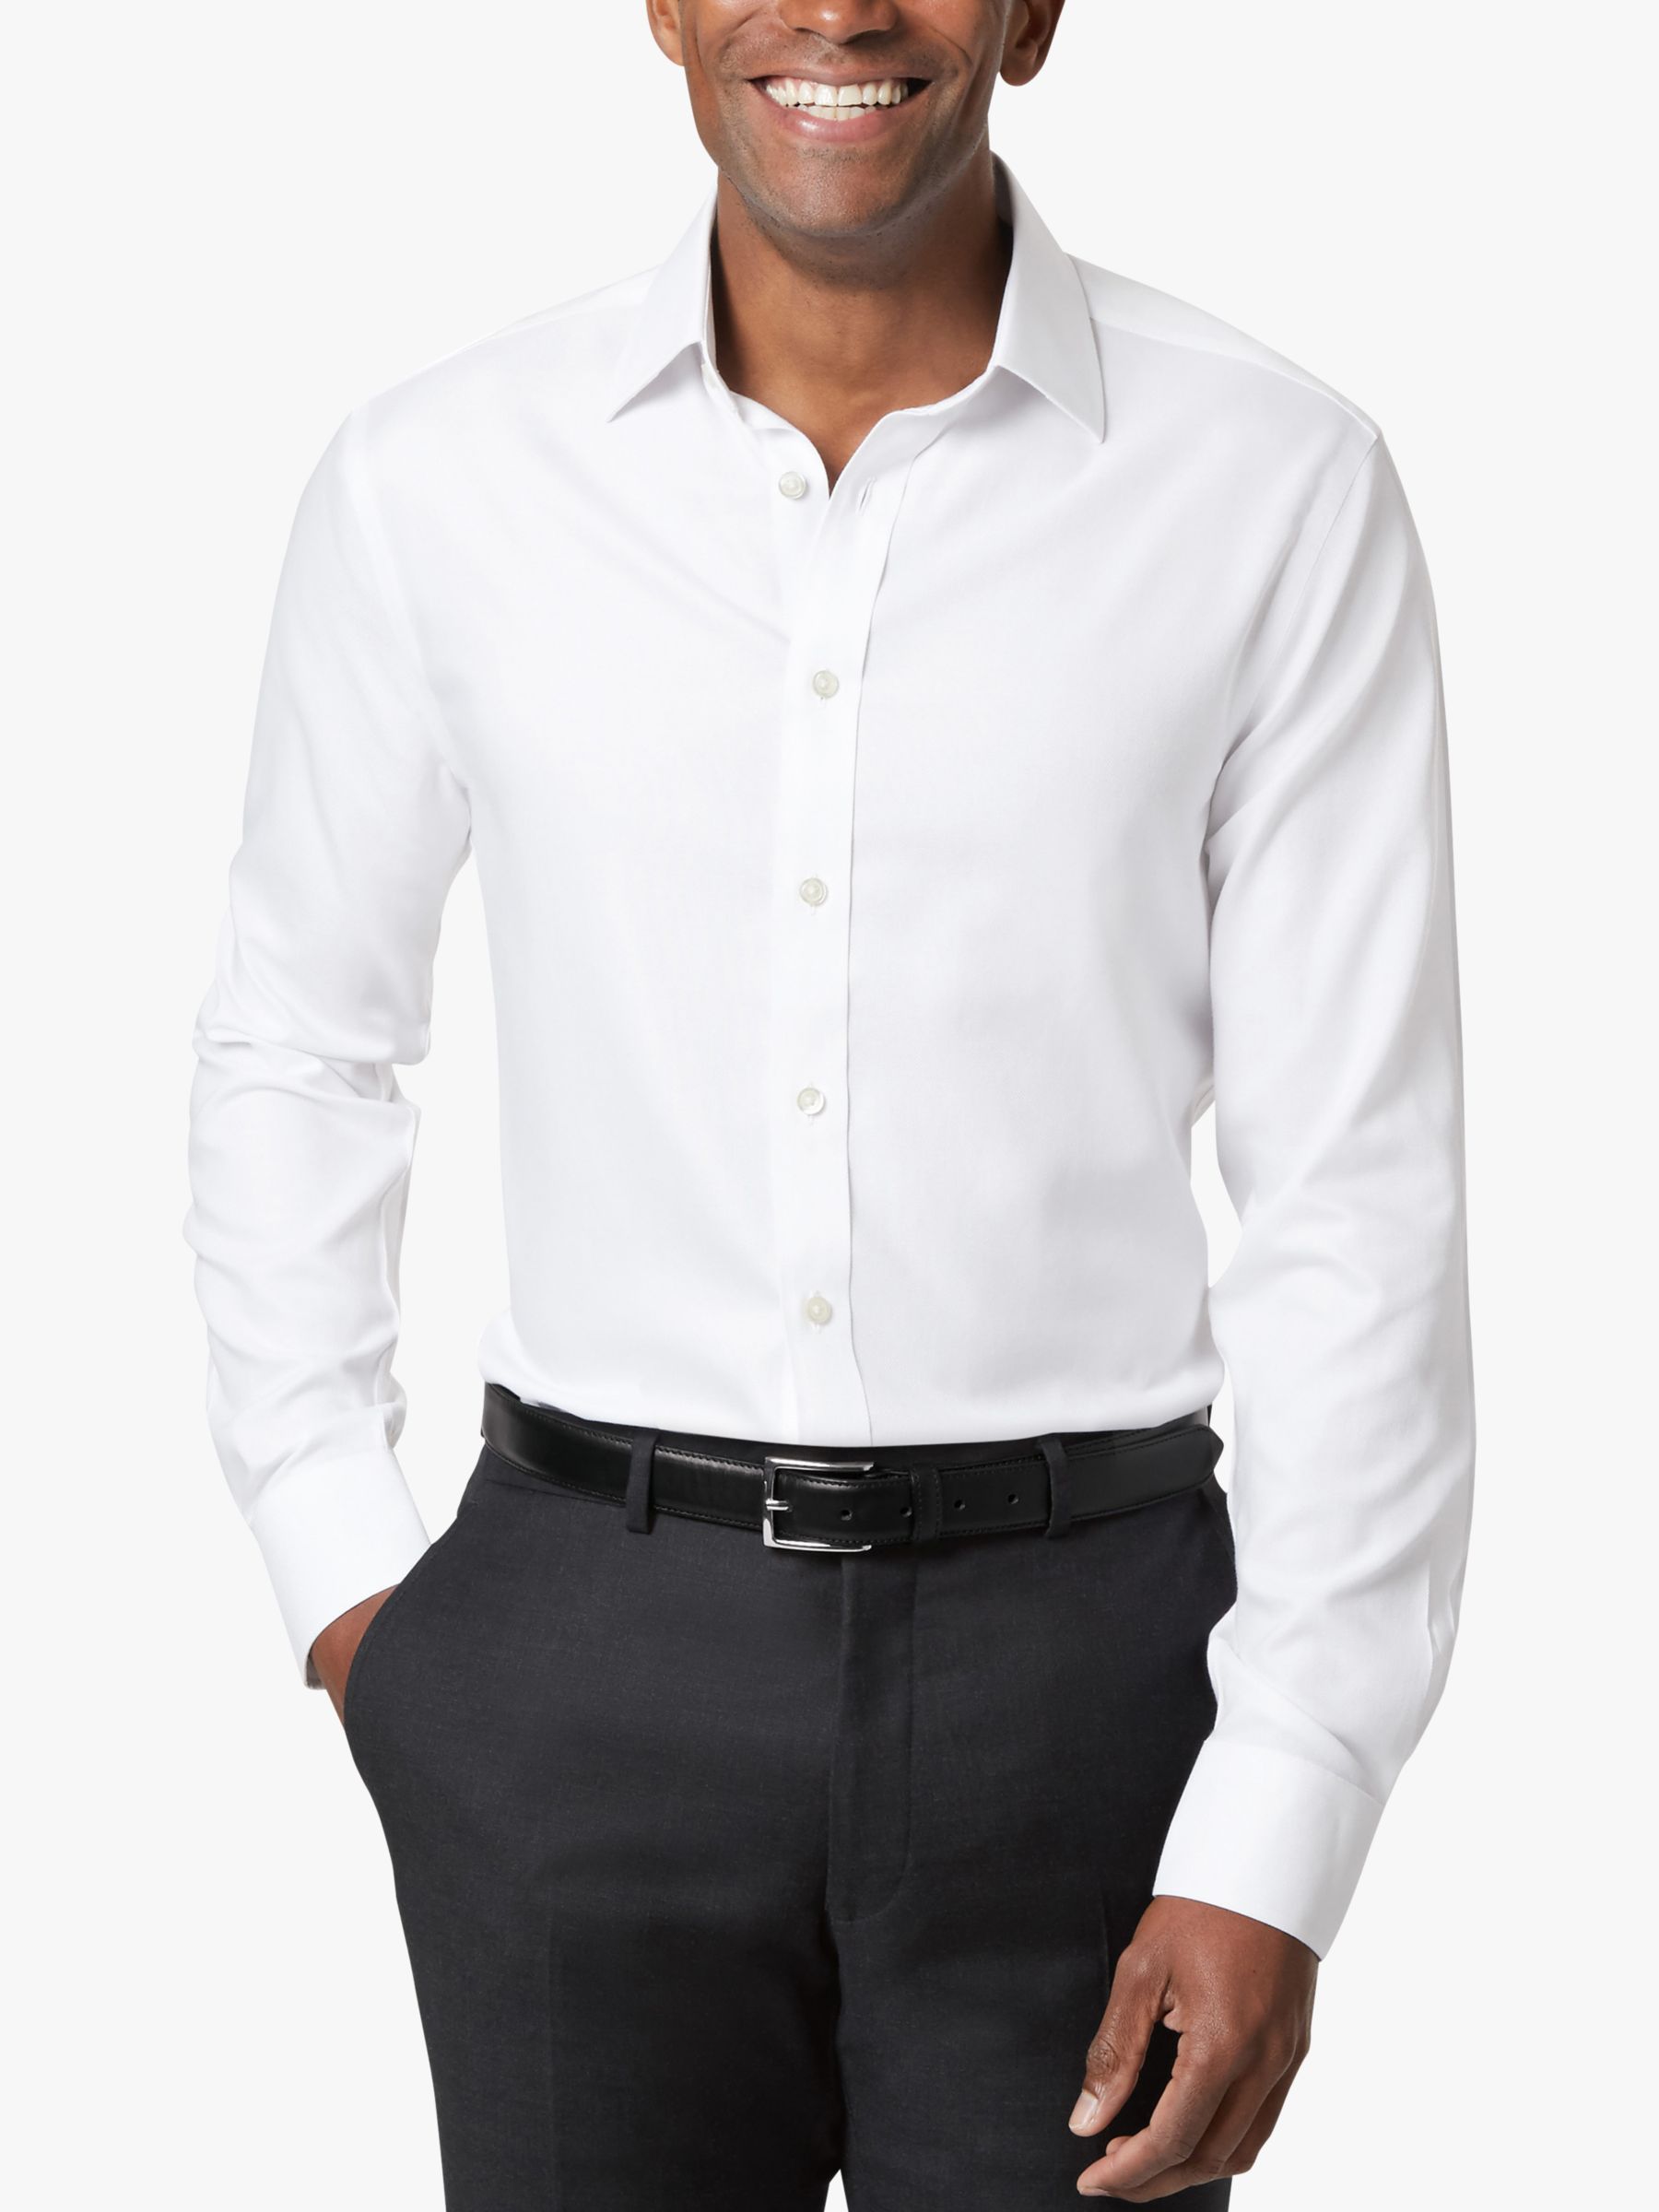 Charles Tyrwhitt Non-Iron Slim Fit Oxford Shirt, White, 14.5